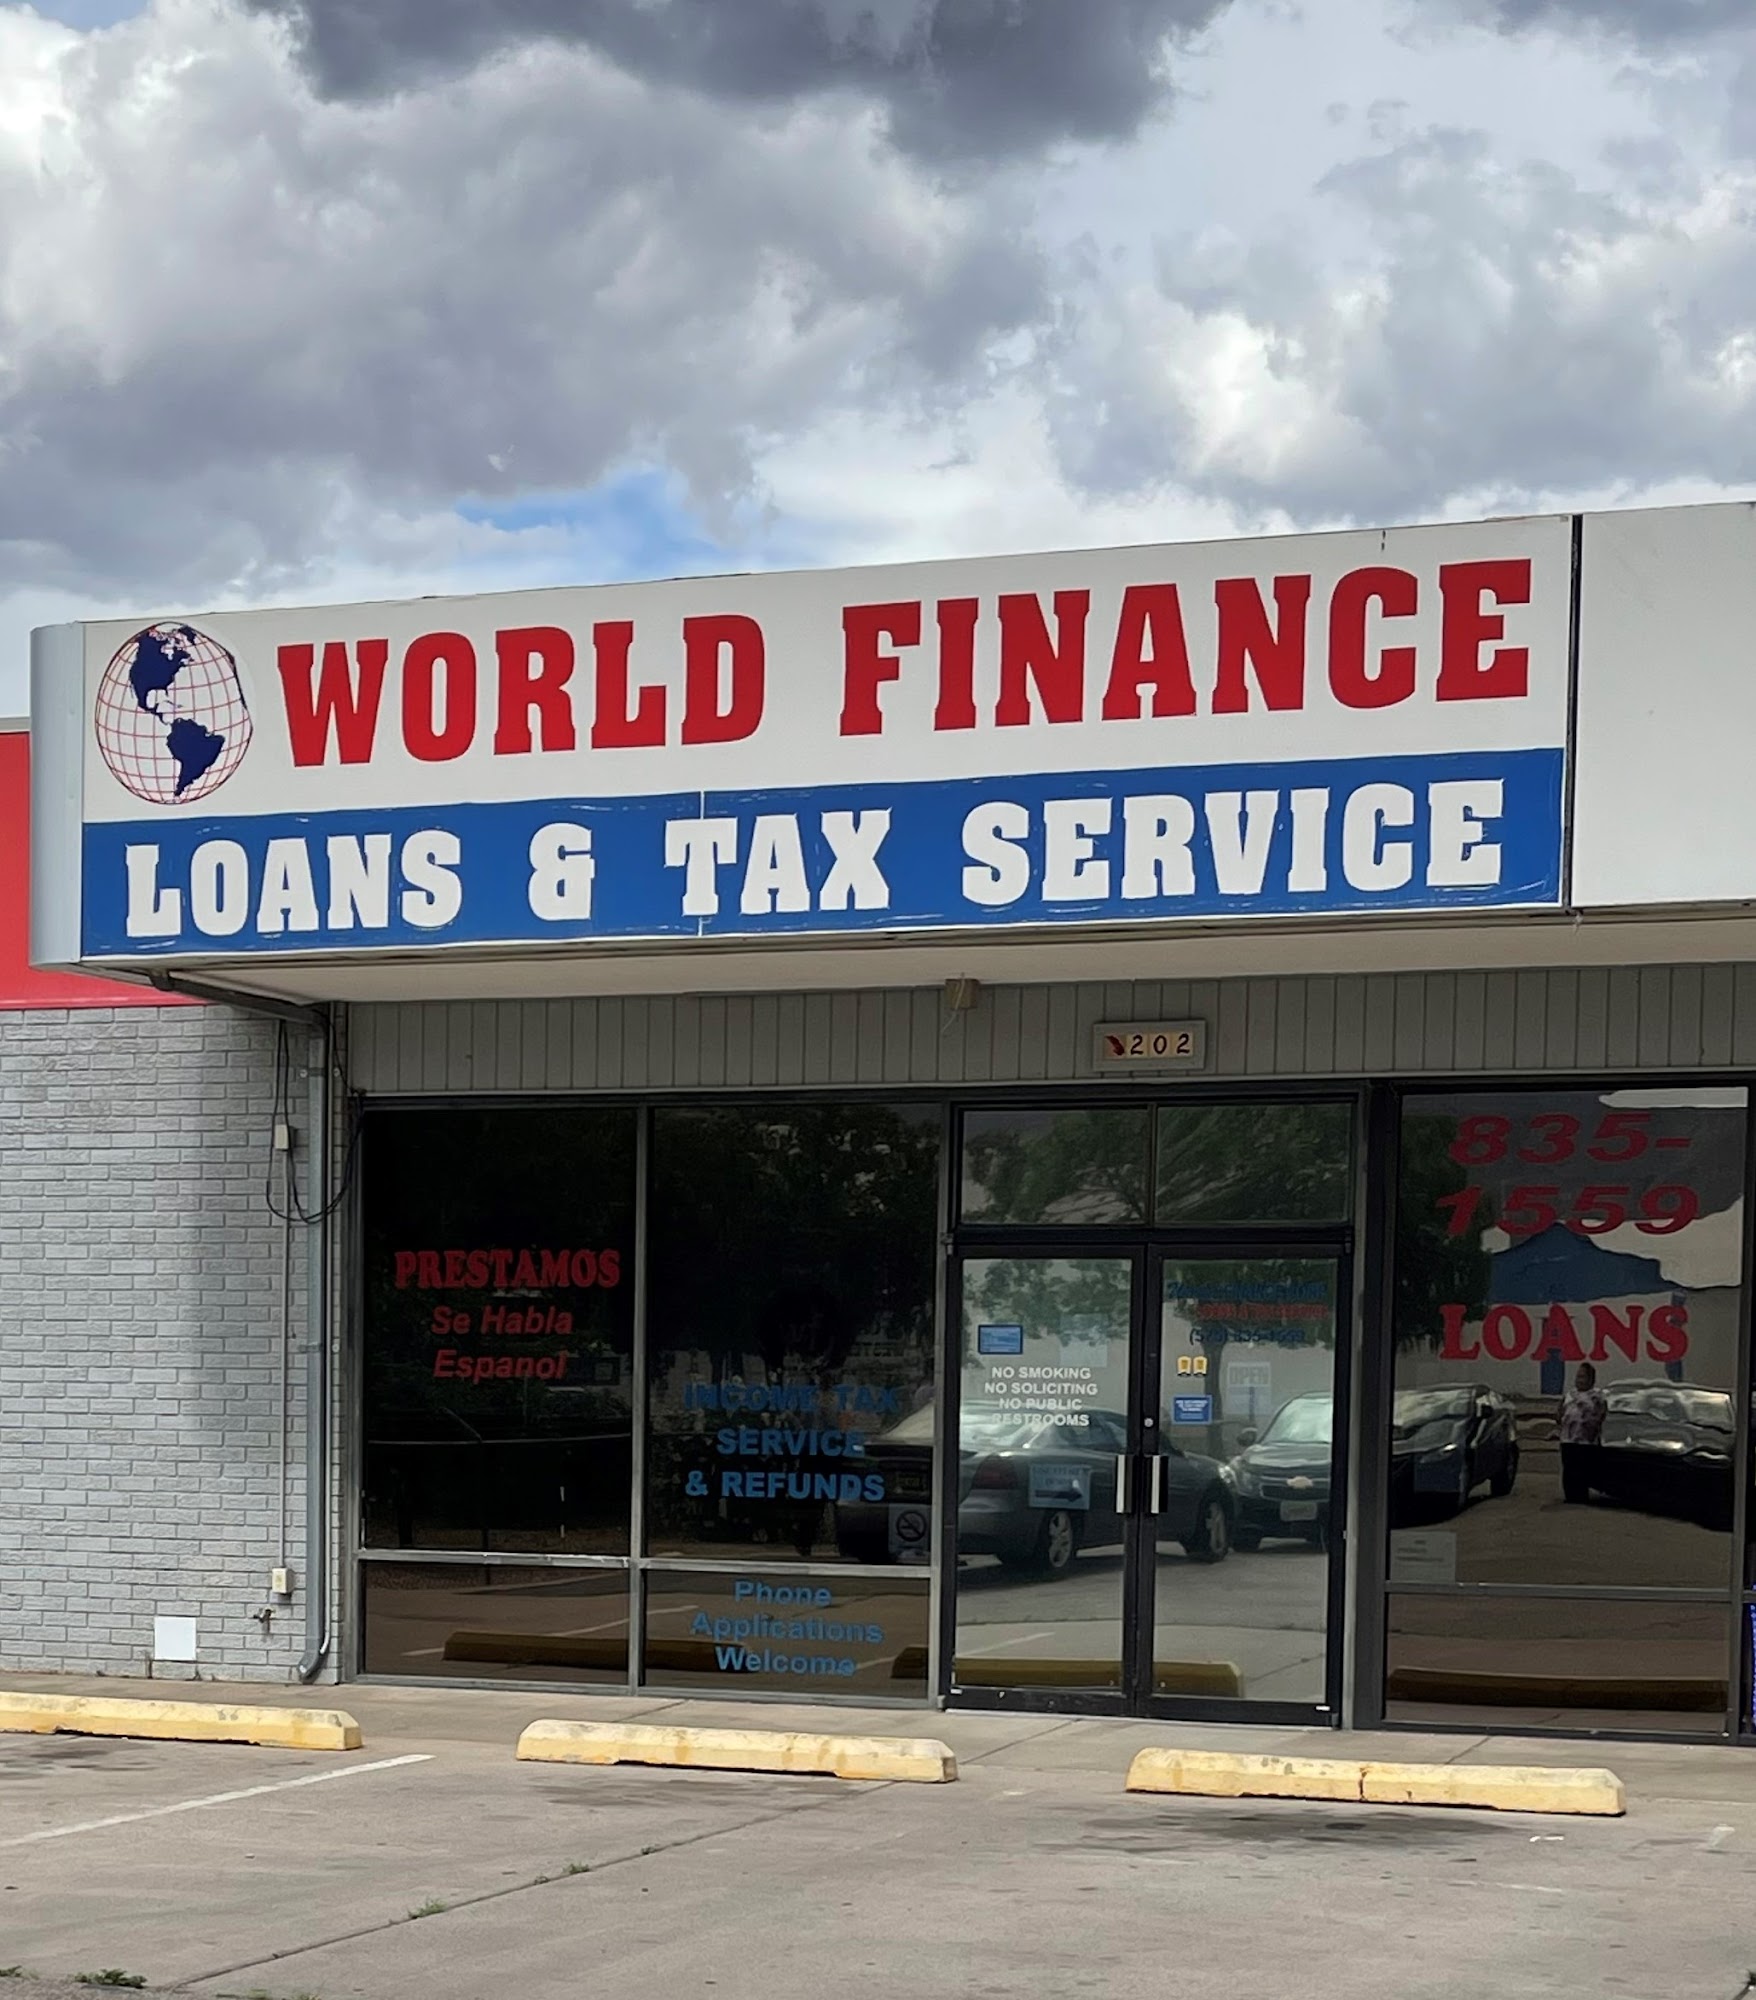 World Finance 407 N California St, Socorro New Mexico 87801